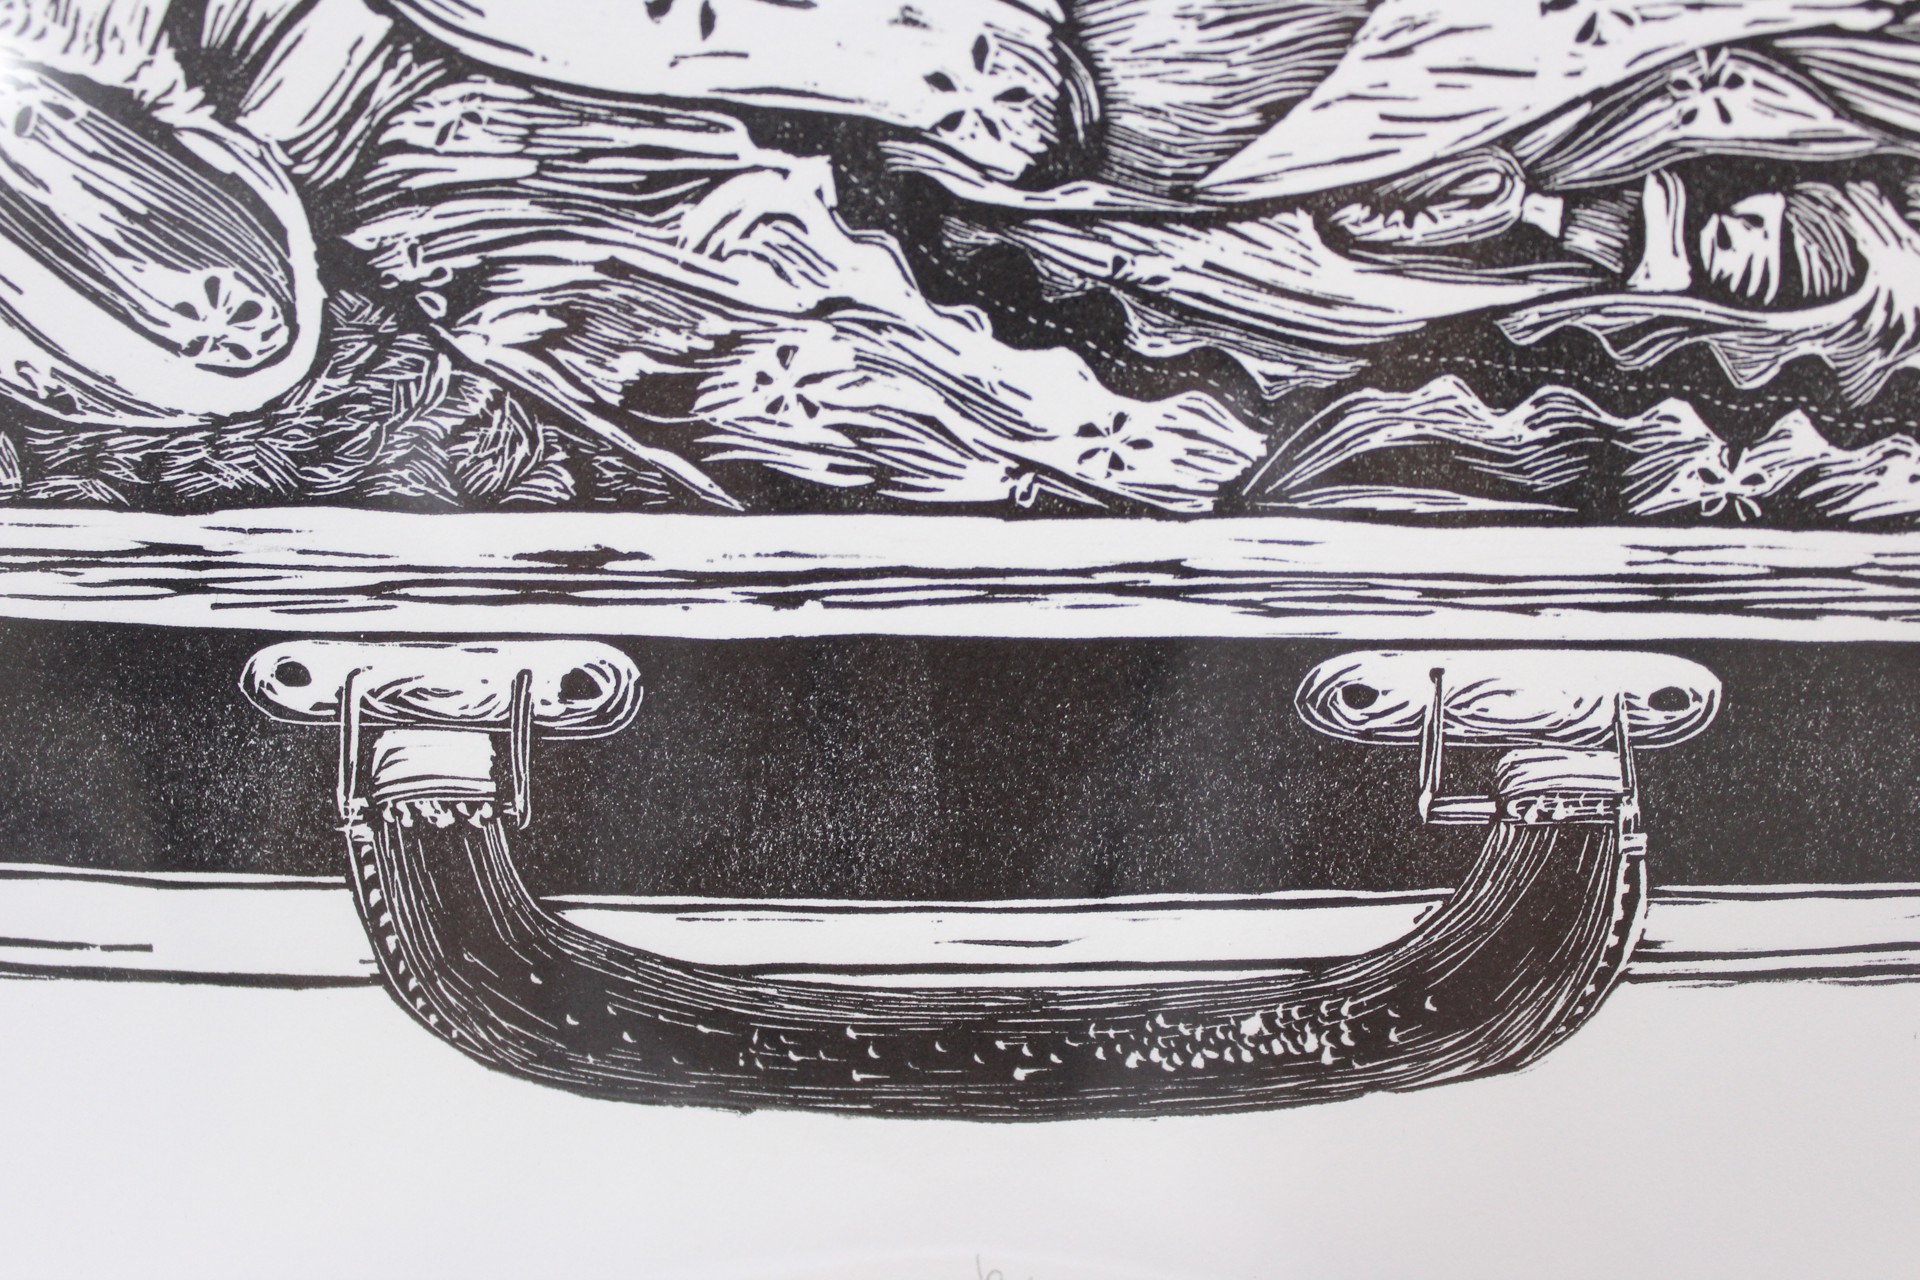 Suitcase of Keepsakes by Masy Hebert Chighizola